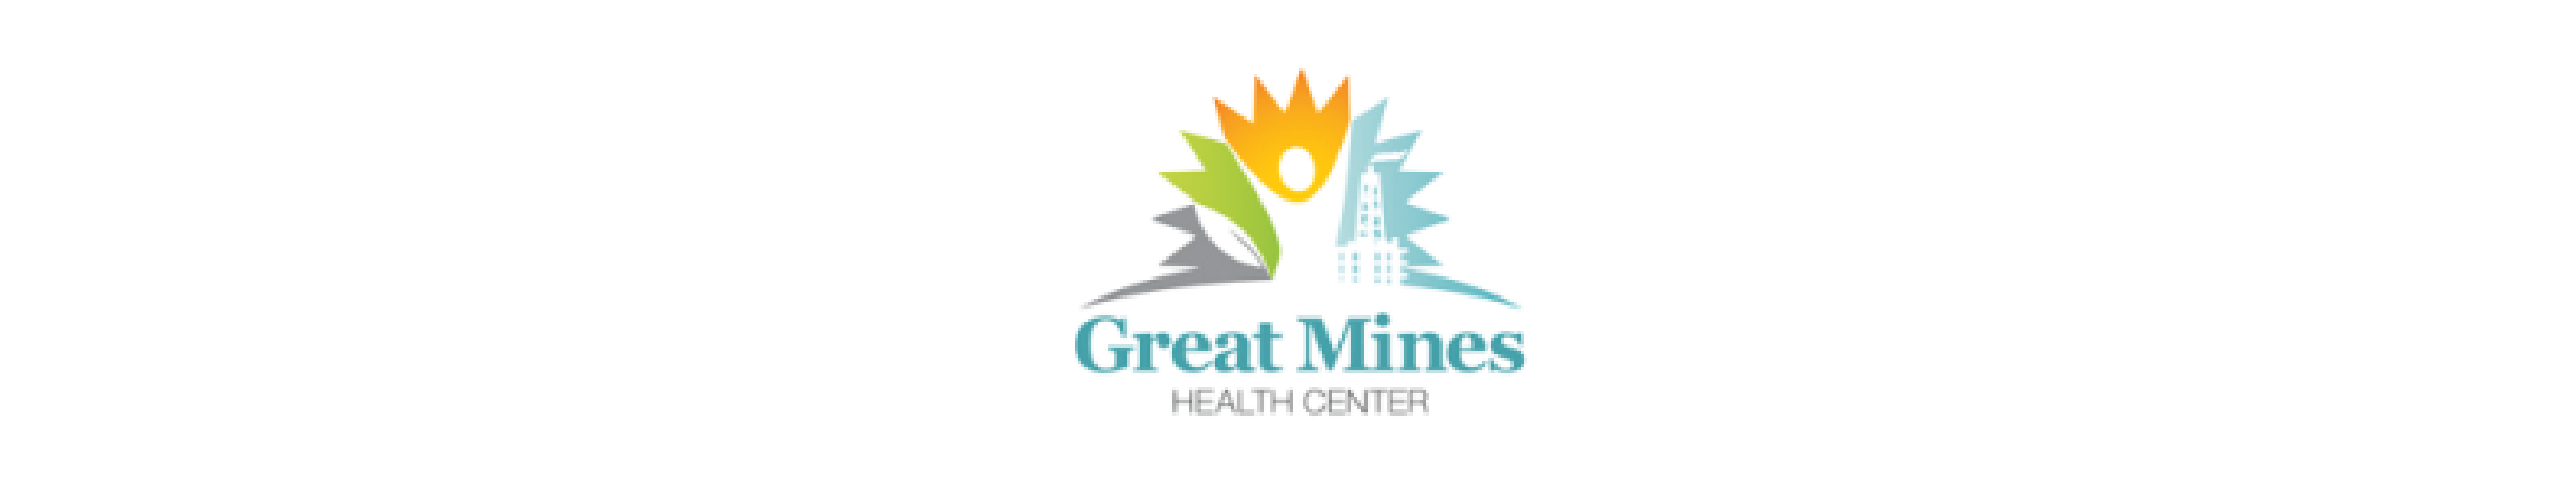 Great Mines Health Center Logo